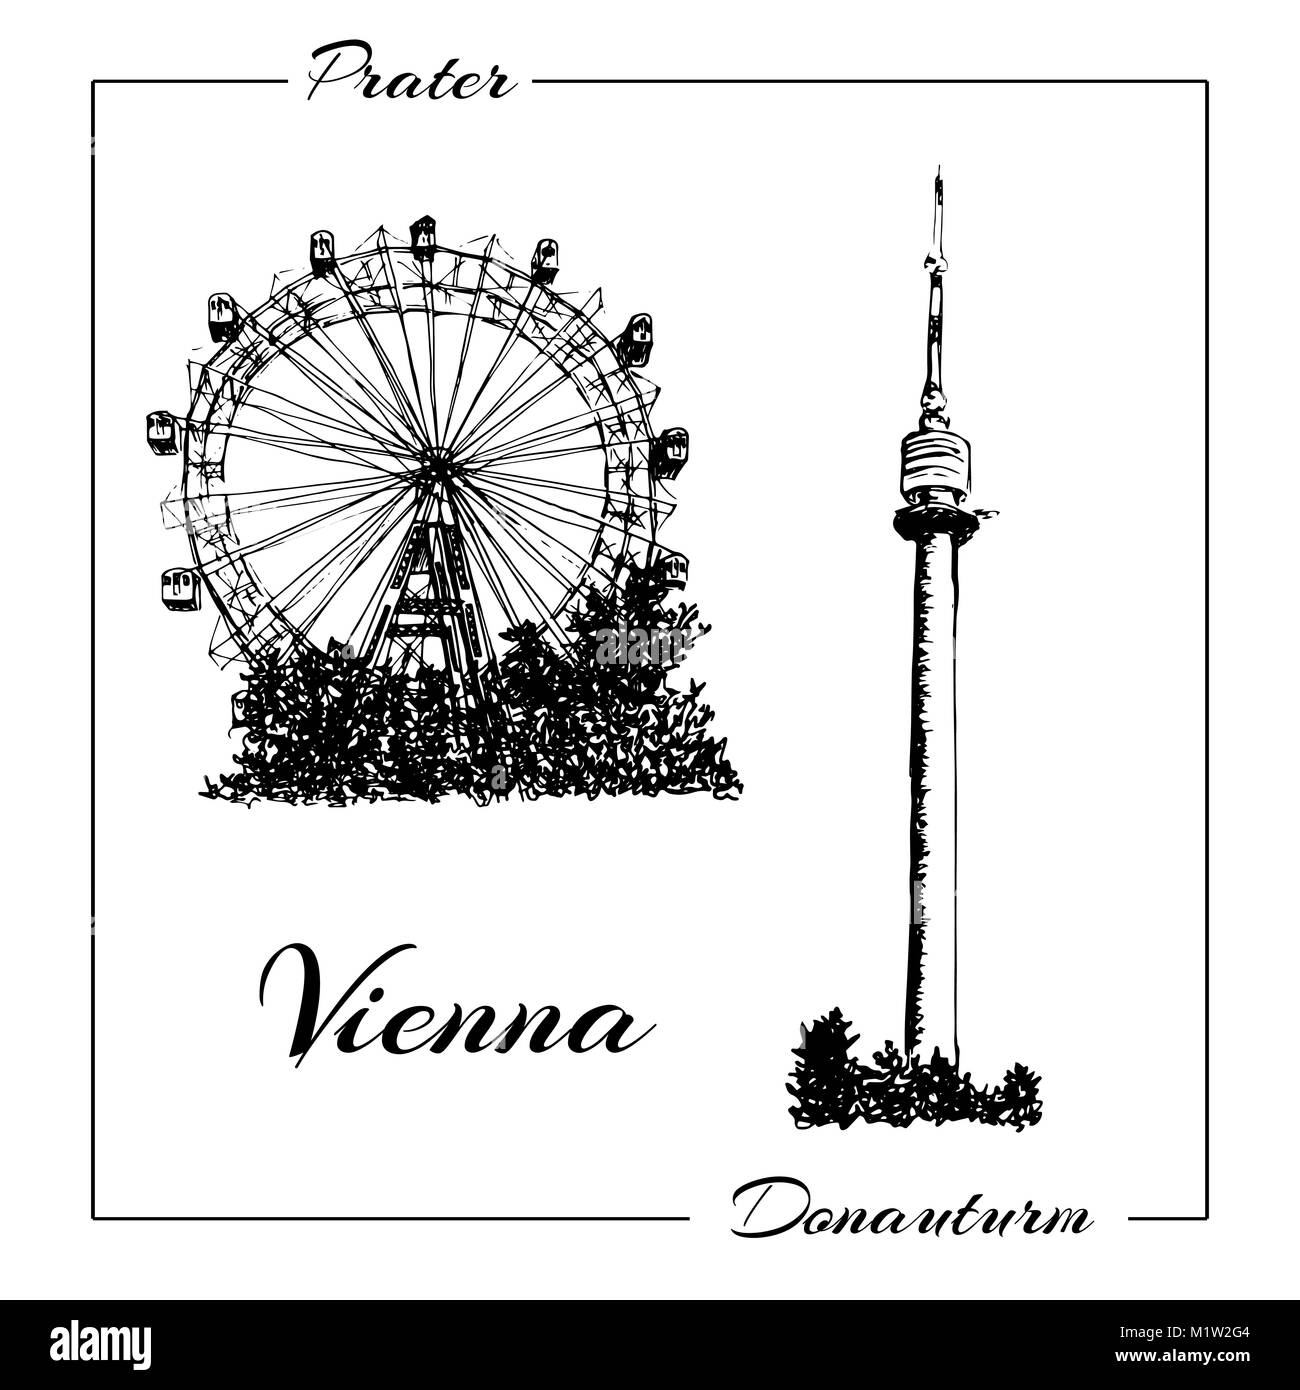 Vienna symbol. Vector hand drawn ink pen sketch illustration. Donauturm ...